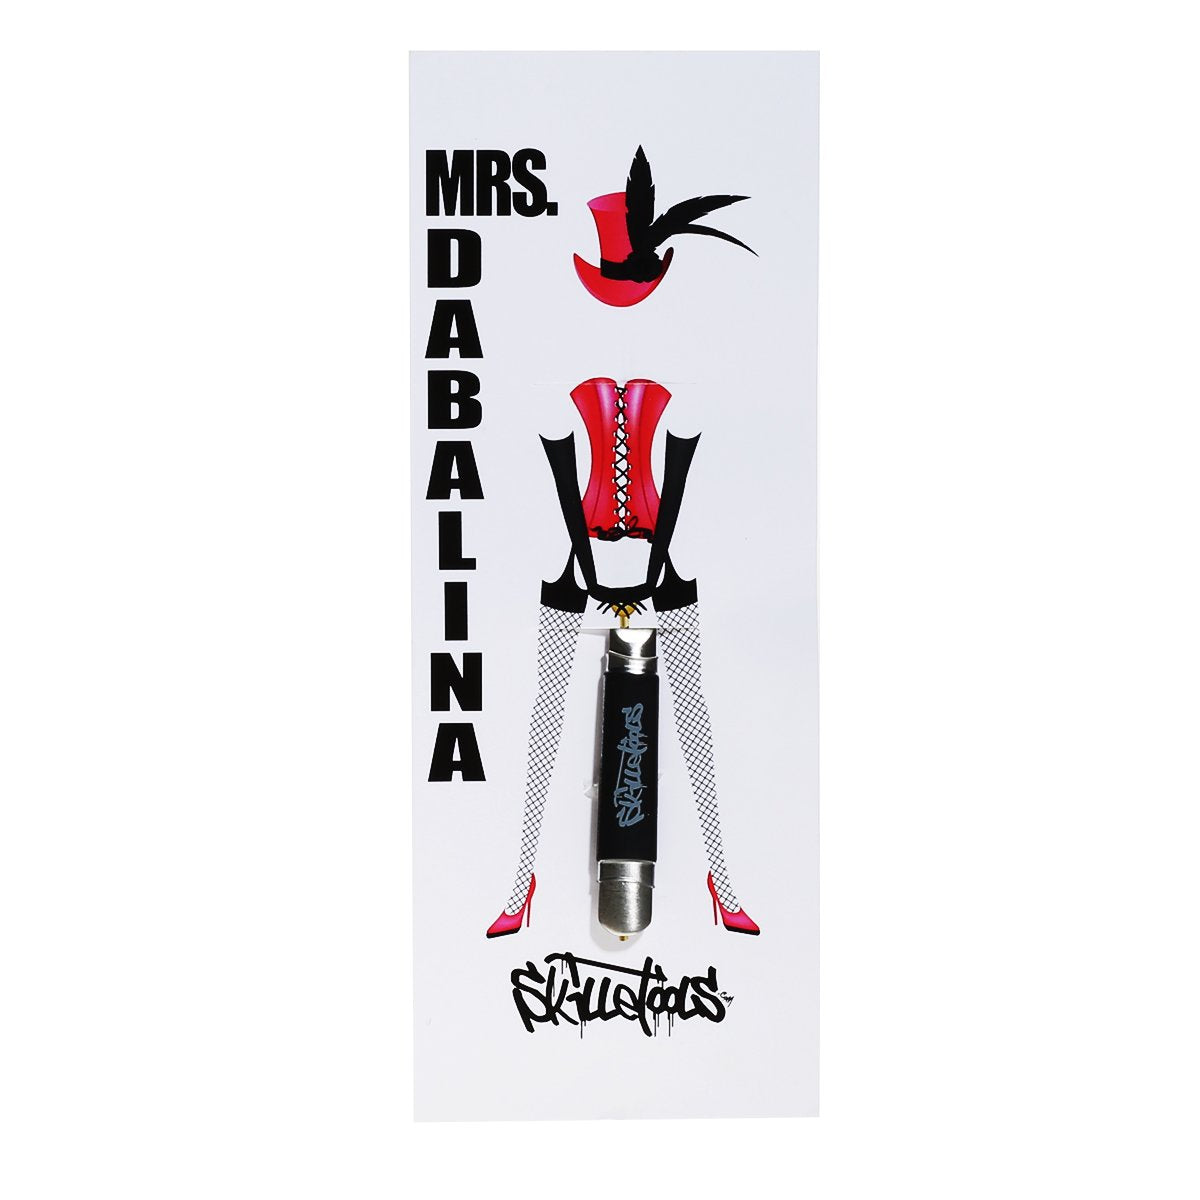 Skilletools Classic Mrs Dabalina Dab Tool Accessories